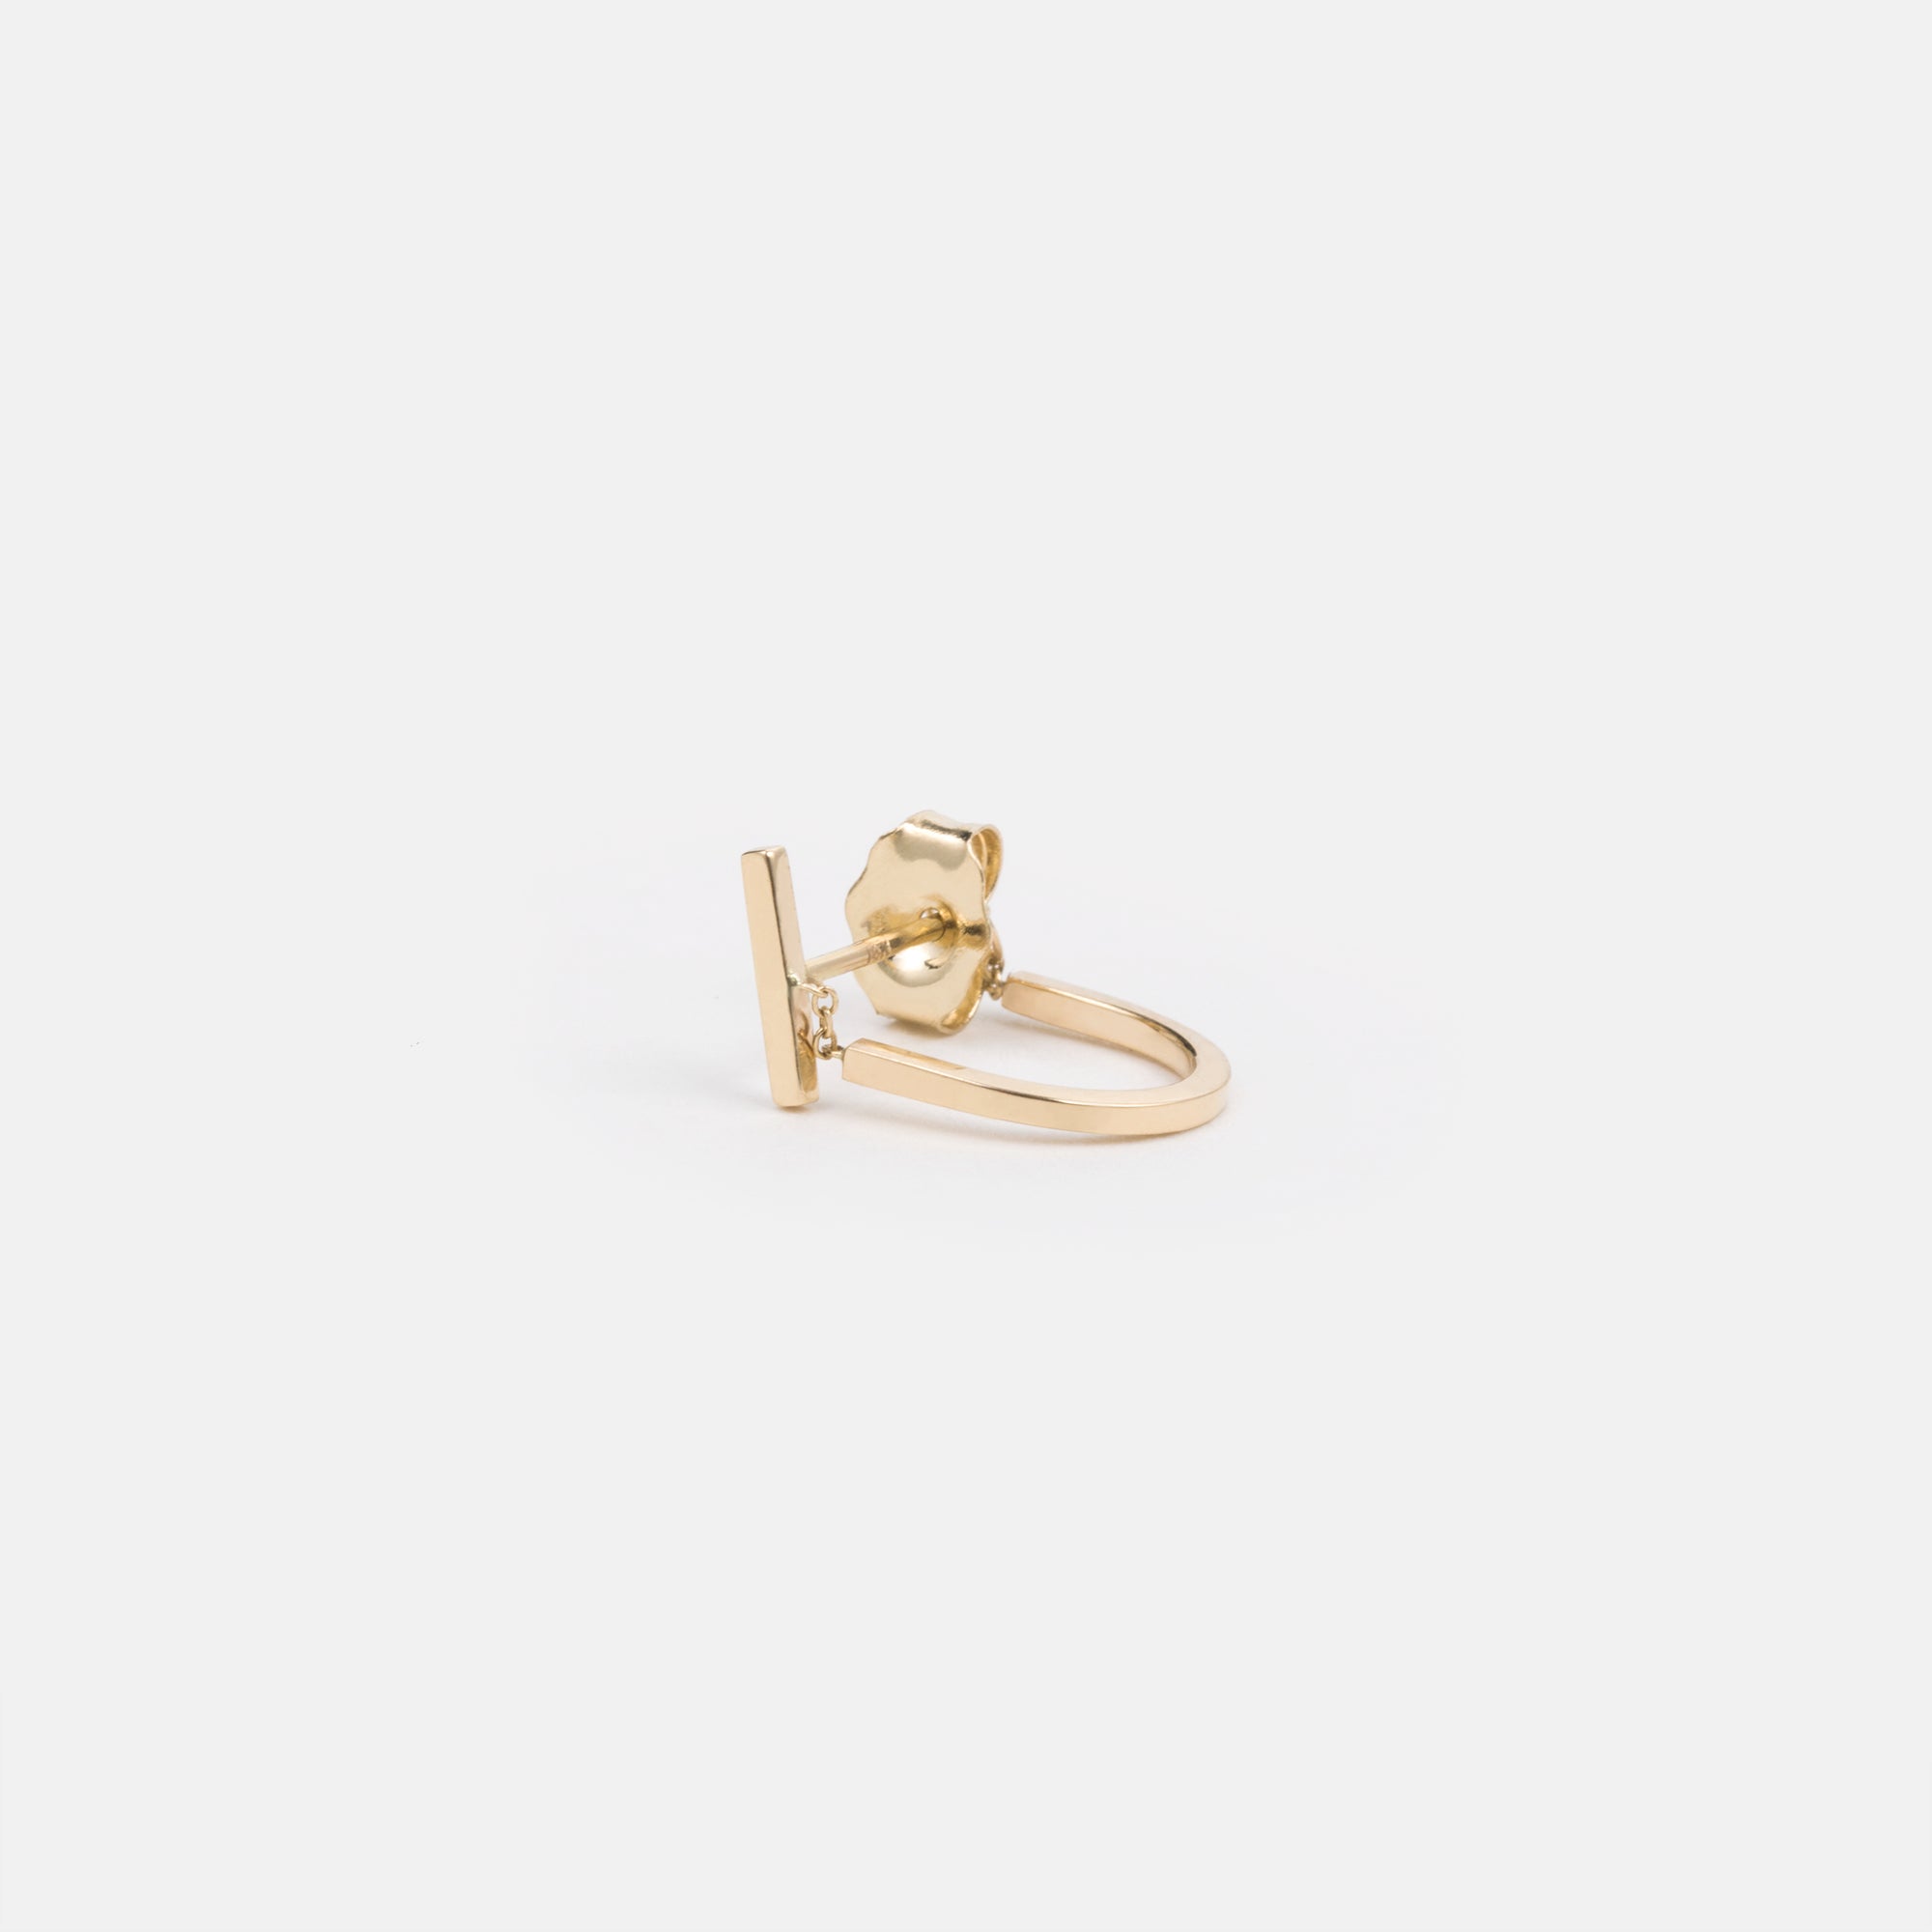 Mini Turi Designer Hug Earring in 14k Gold By SHW Fine Jewelry NYC